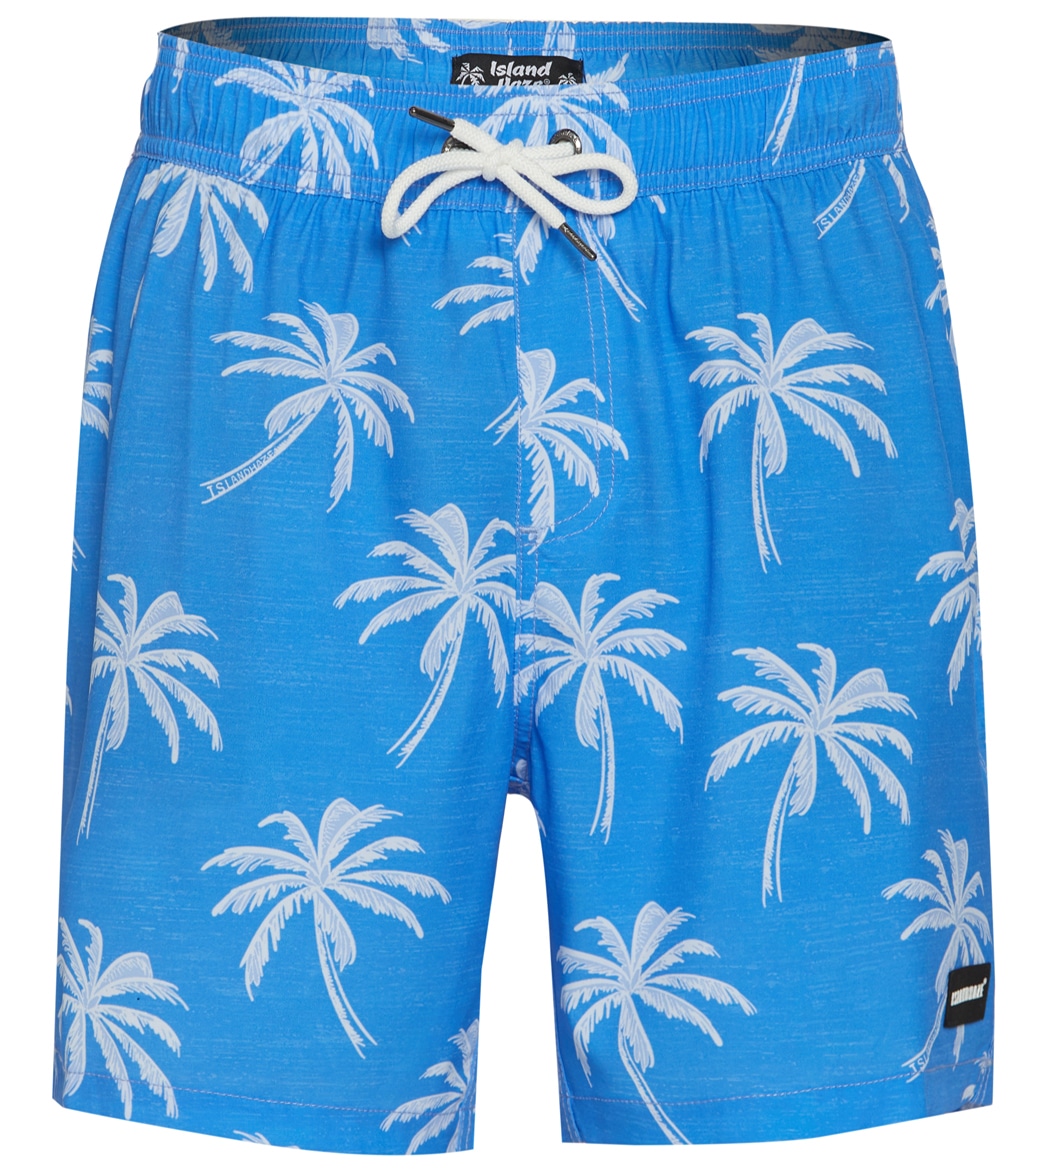 Island Haze Men's Palmlaza Printed Swim Trunks - Blue Large - Swimoutlet.com